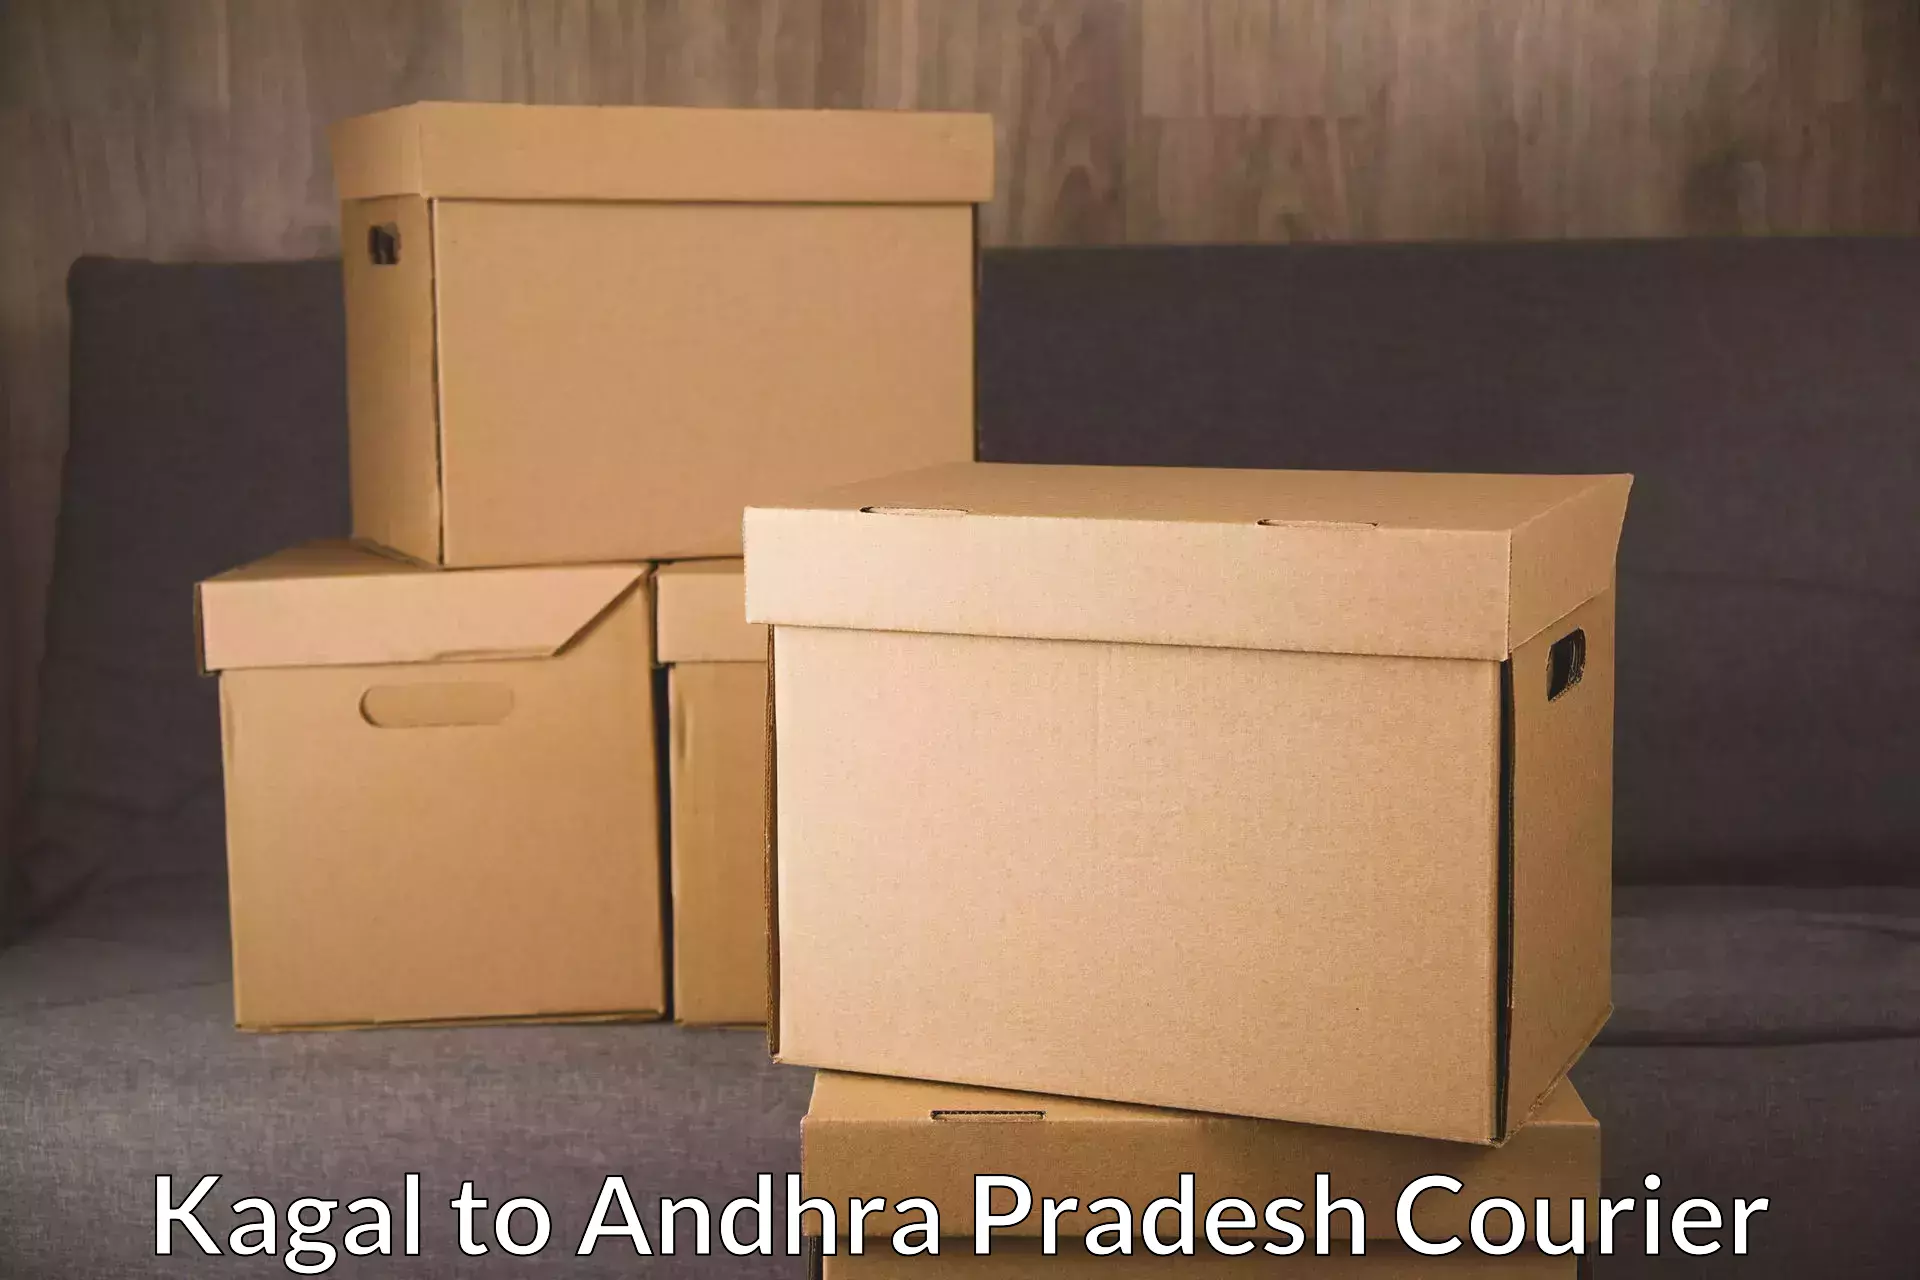 Pharmaceutical courier Kagal to Andhra Pradesh